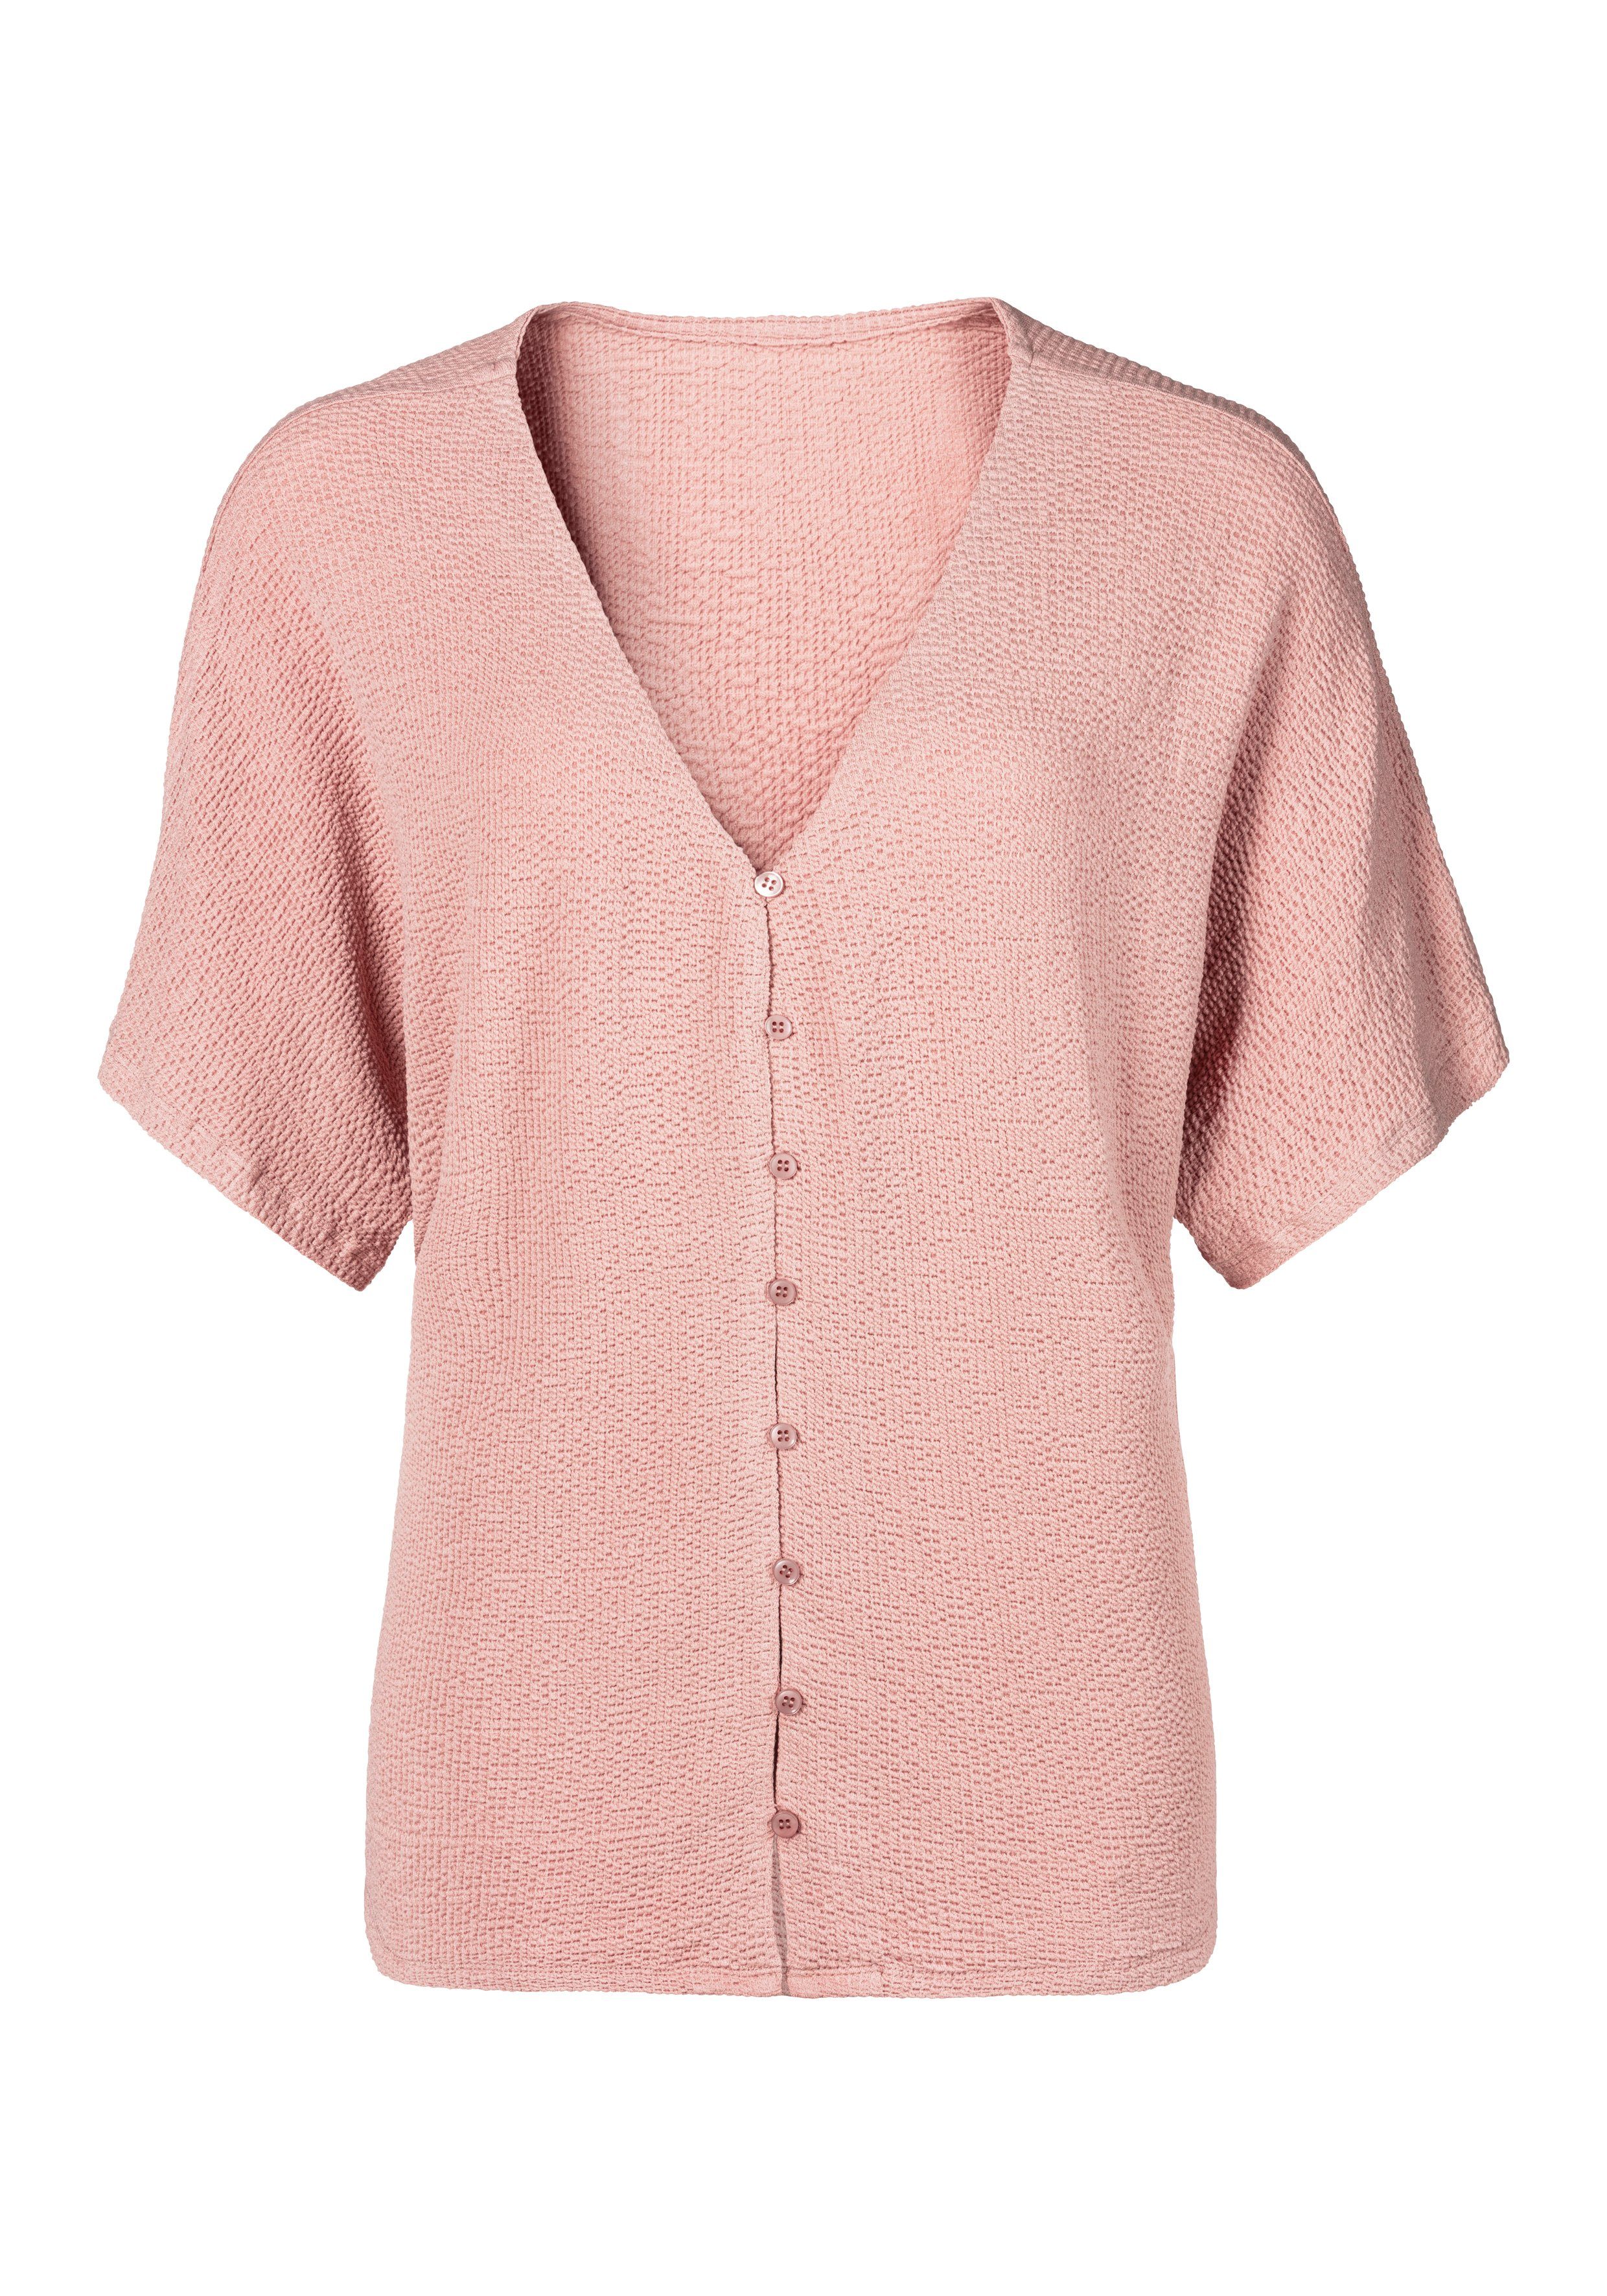 Ware strukturierter LASCANA rosé T-Shirt aus